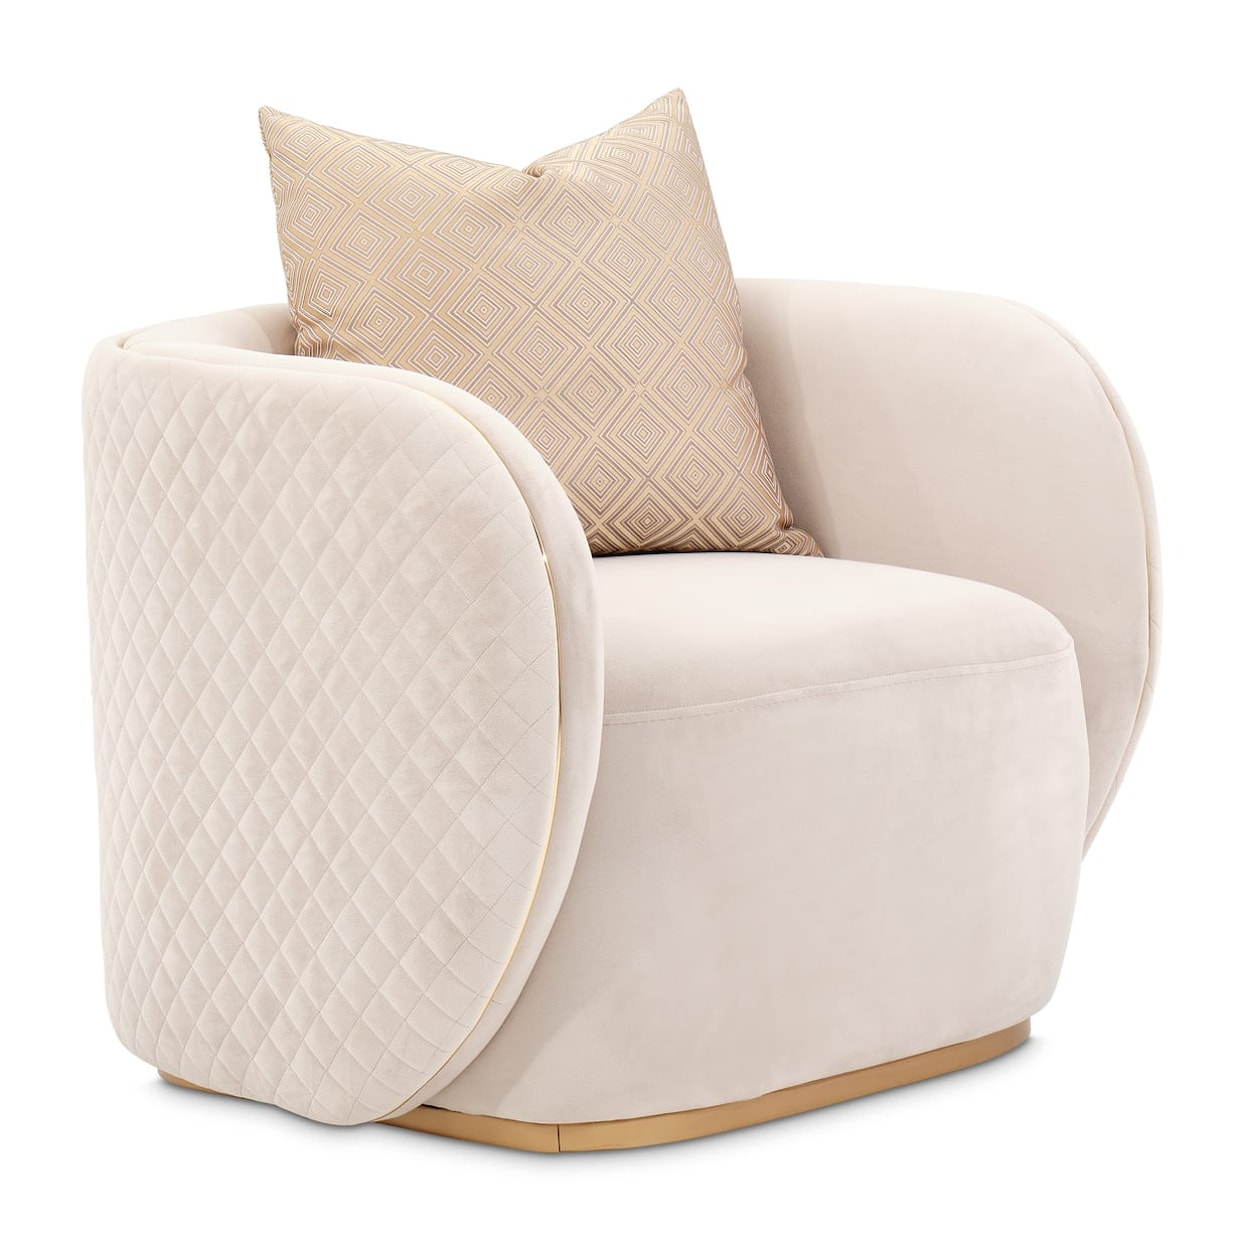 Michael Amini Ariana Upholstered Chair